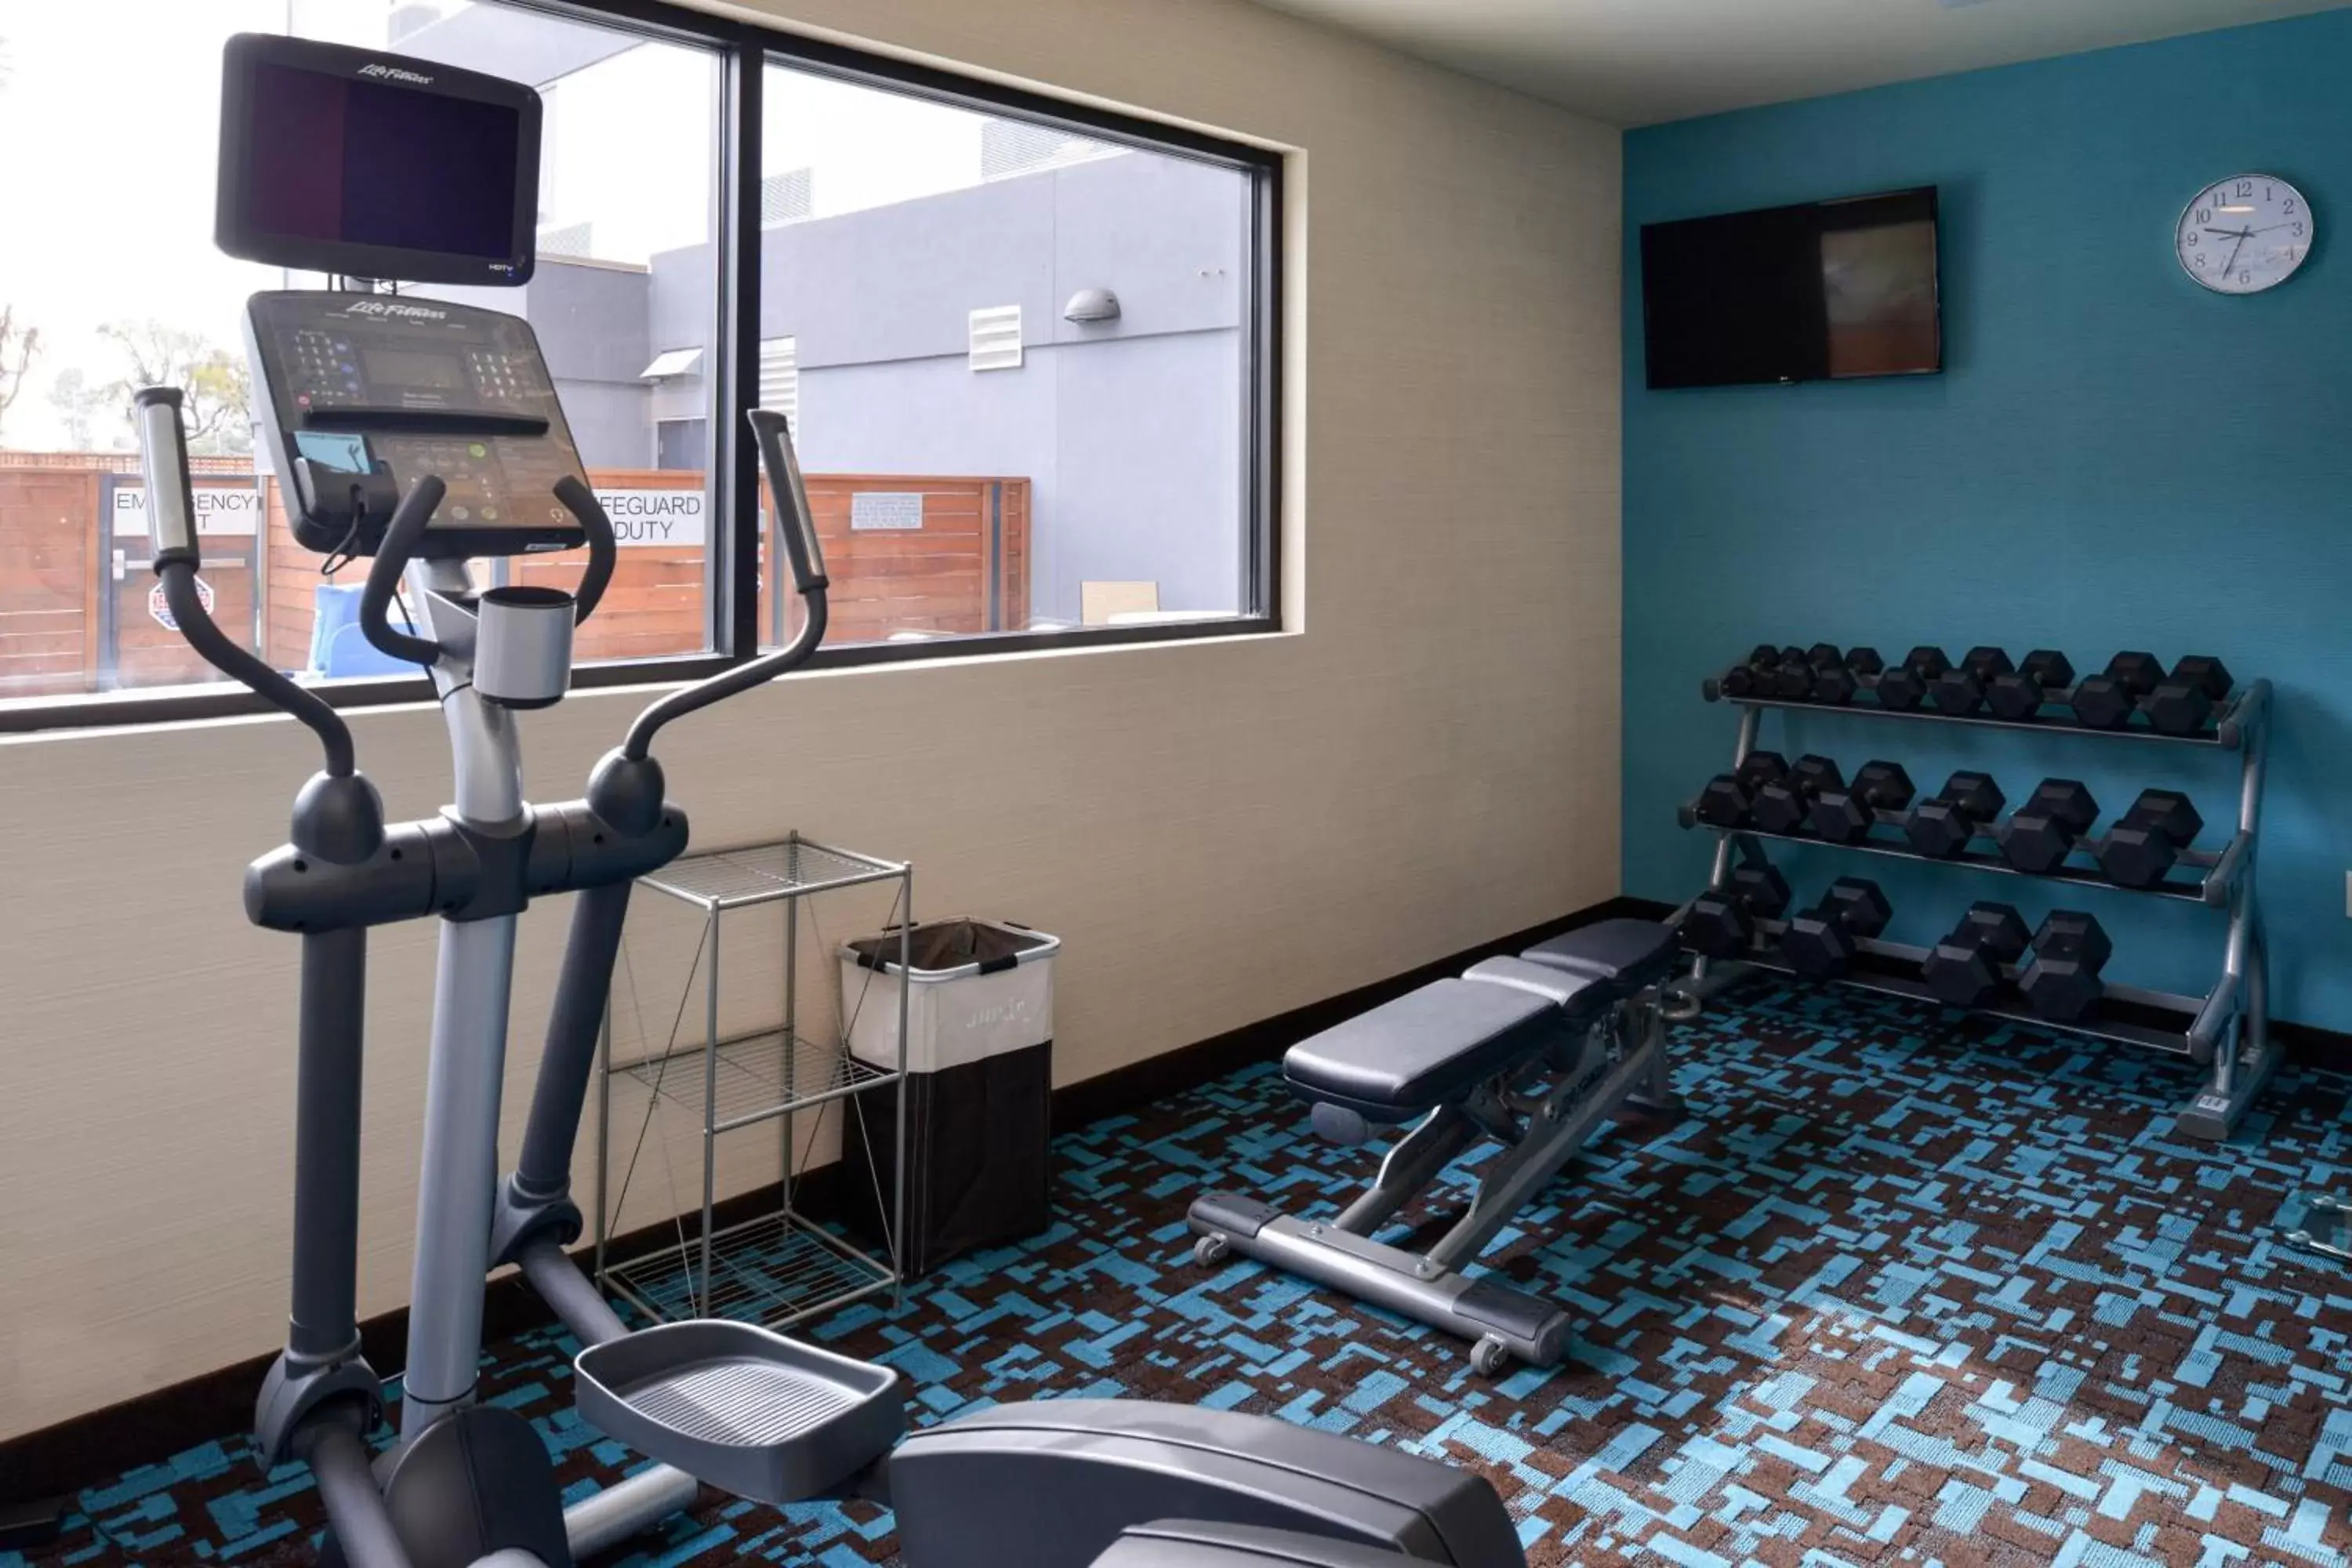 Fitness centre/facilities, Fitness Center/Facilities in Fairfield Inn & Suites by Marriott Santa Cruz